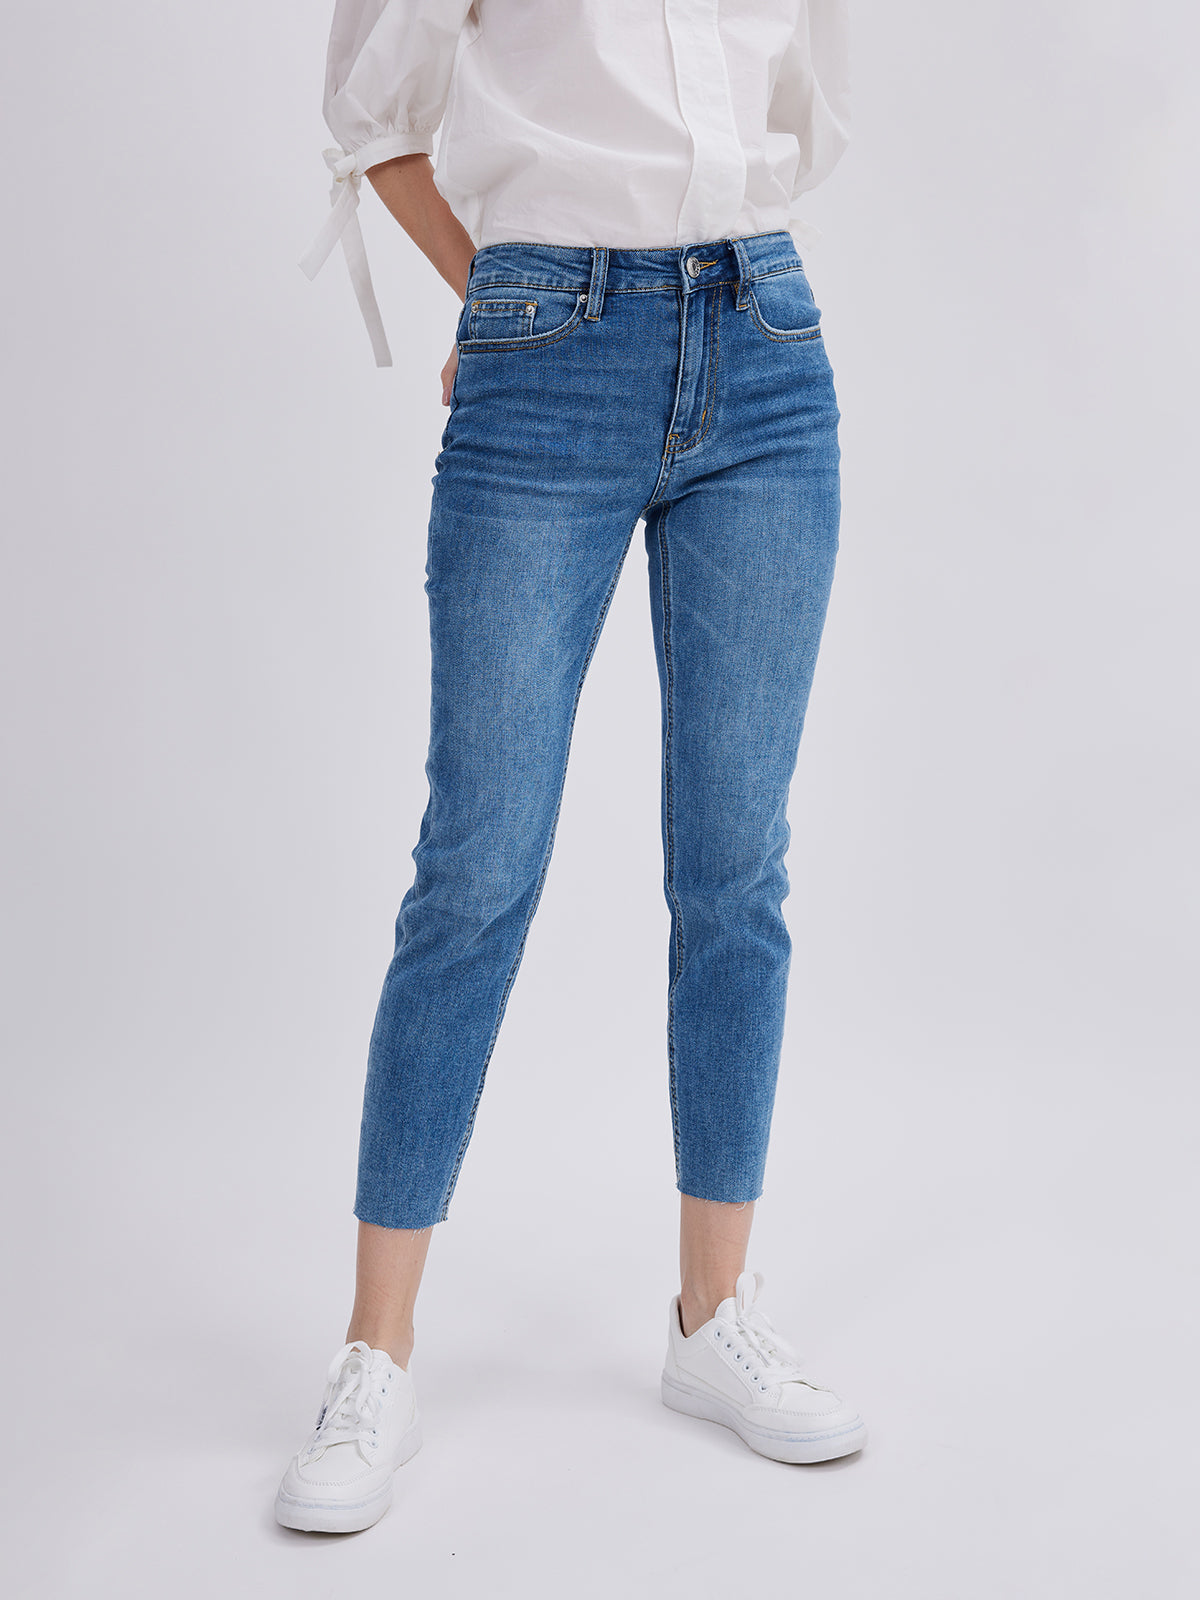 Blue Jeans for Women